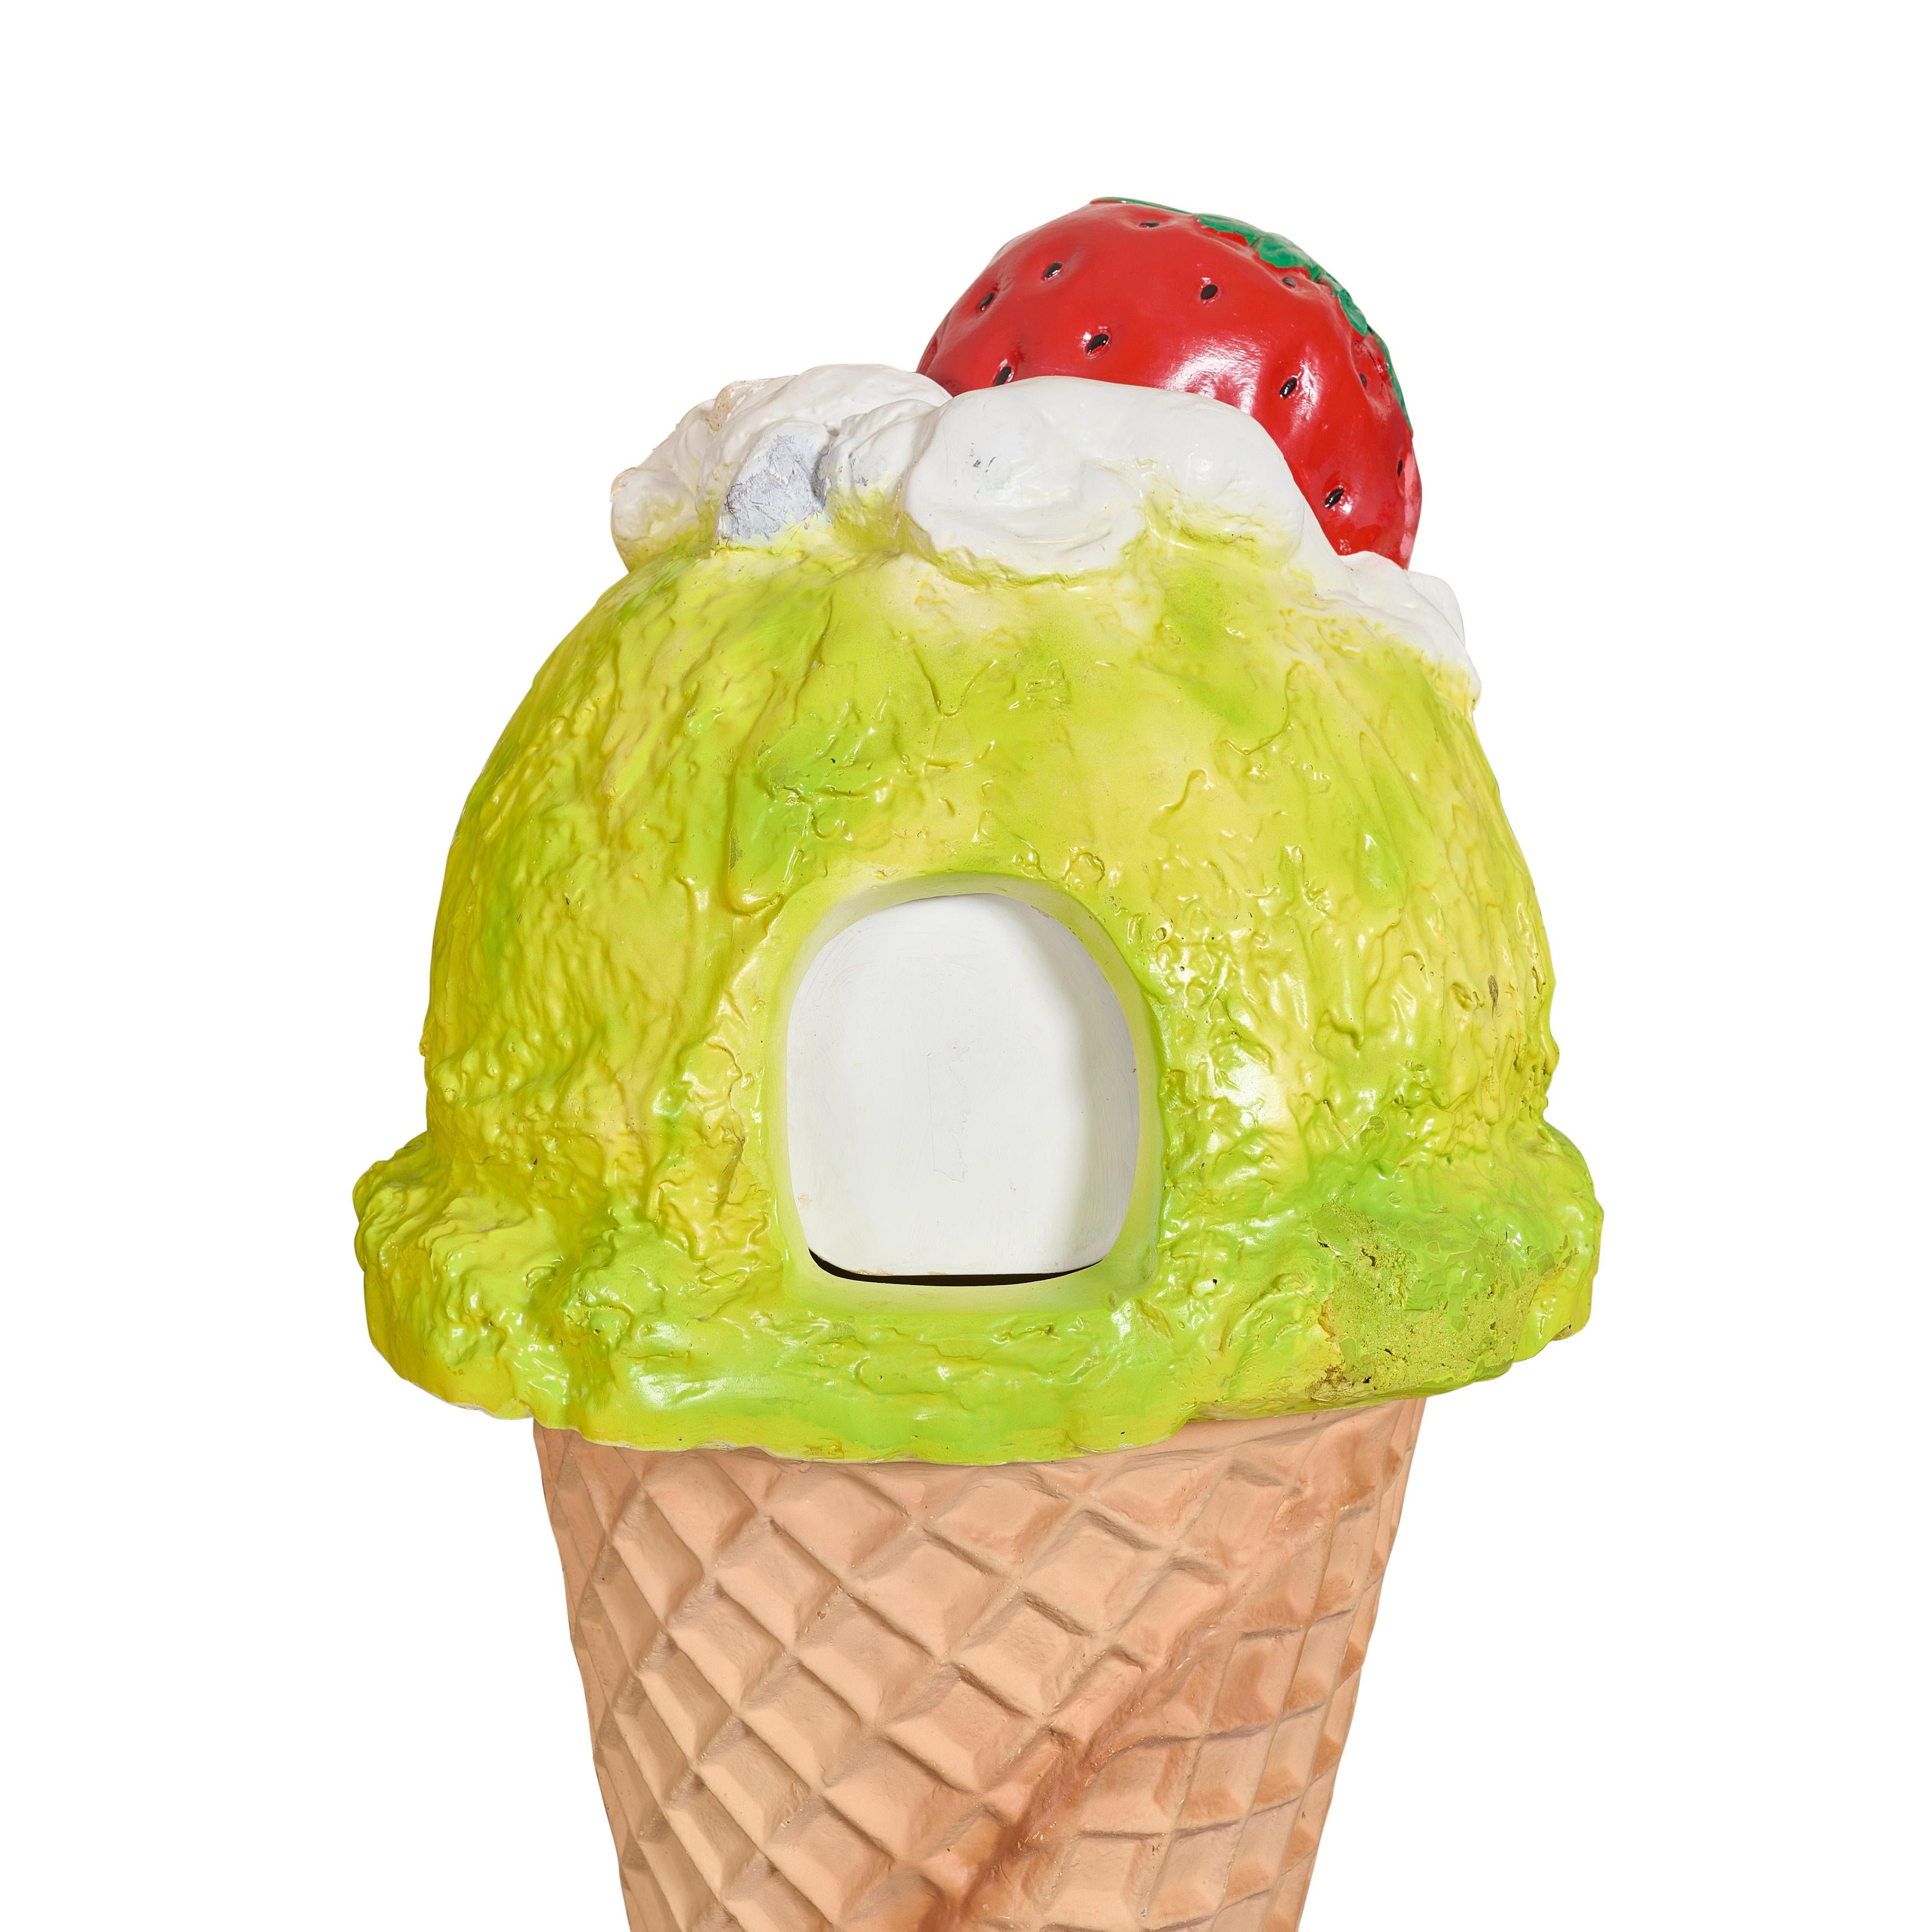 Fiberglass ice cream / gelato cone trash can with three openings. Very fun.